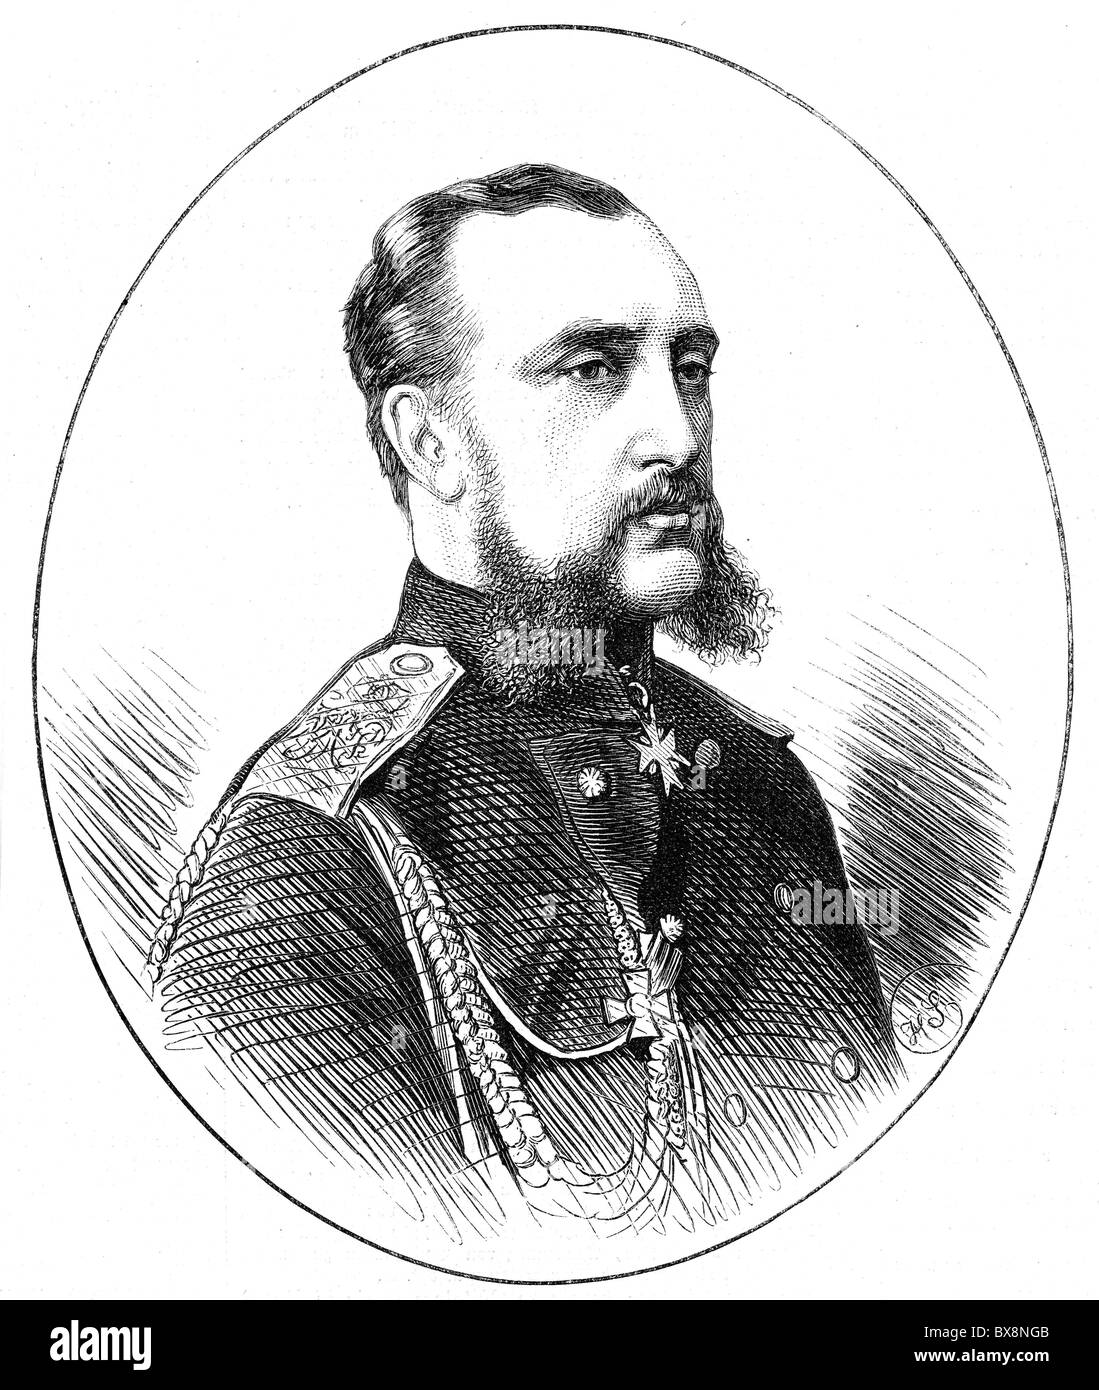 Nicholas Nikolaevich, 8.8.1831 - 25.4.1891, Grand Duke of Russia, Russian field marshal, portrait, wood engraving, 1876, Stock Photo